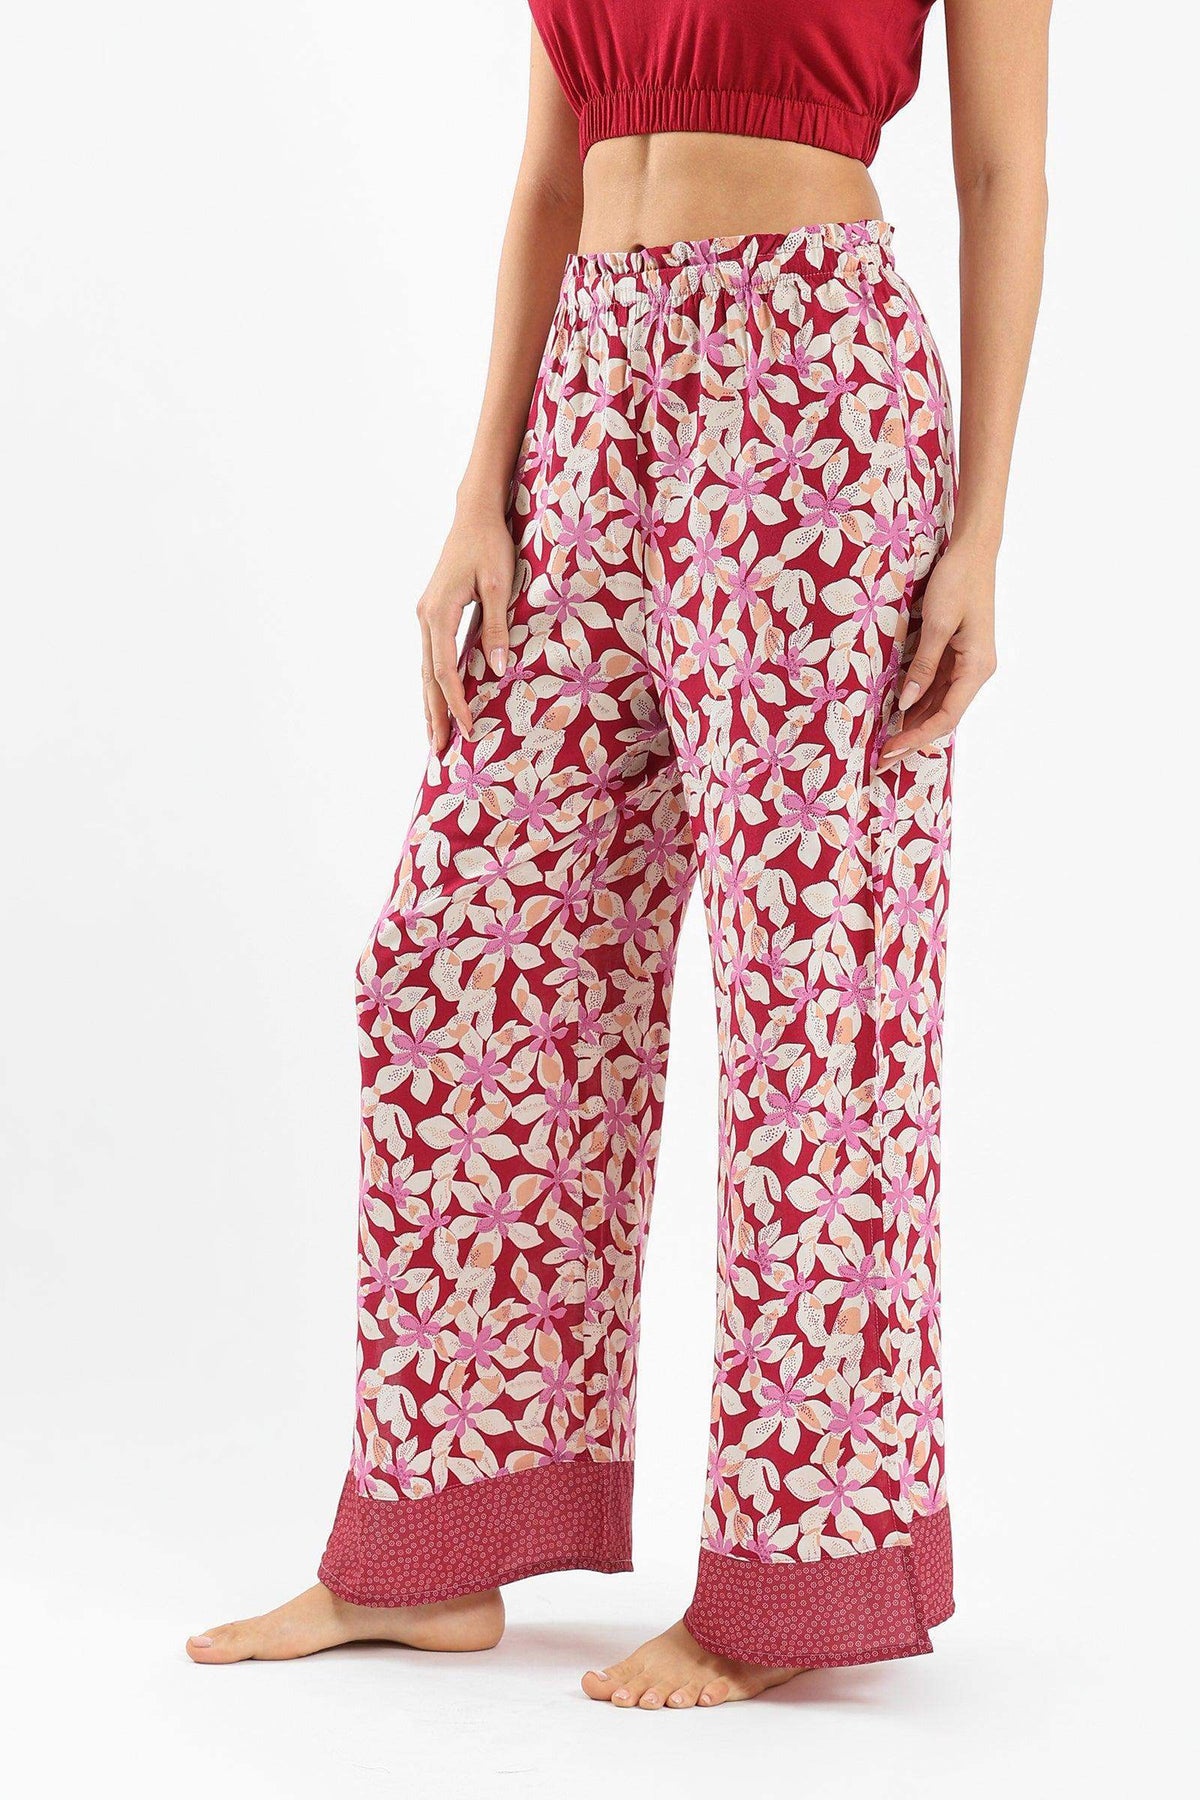 Viscose Printed Pyjama Pants - Carina - كارينا